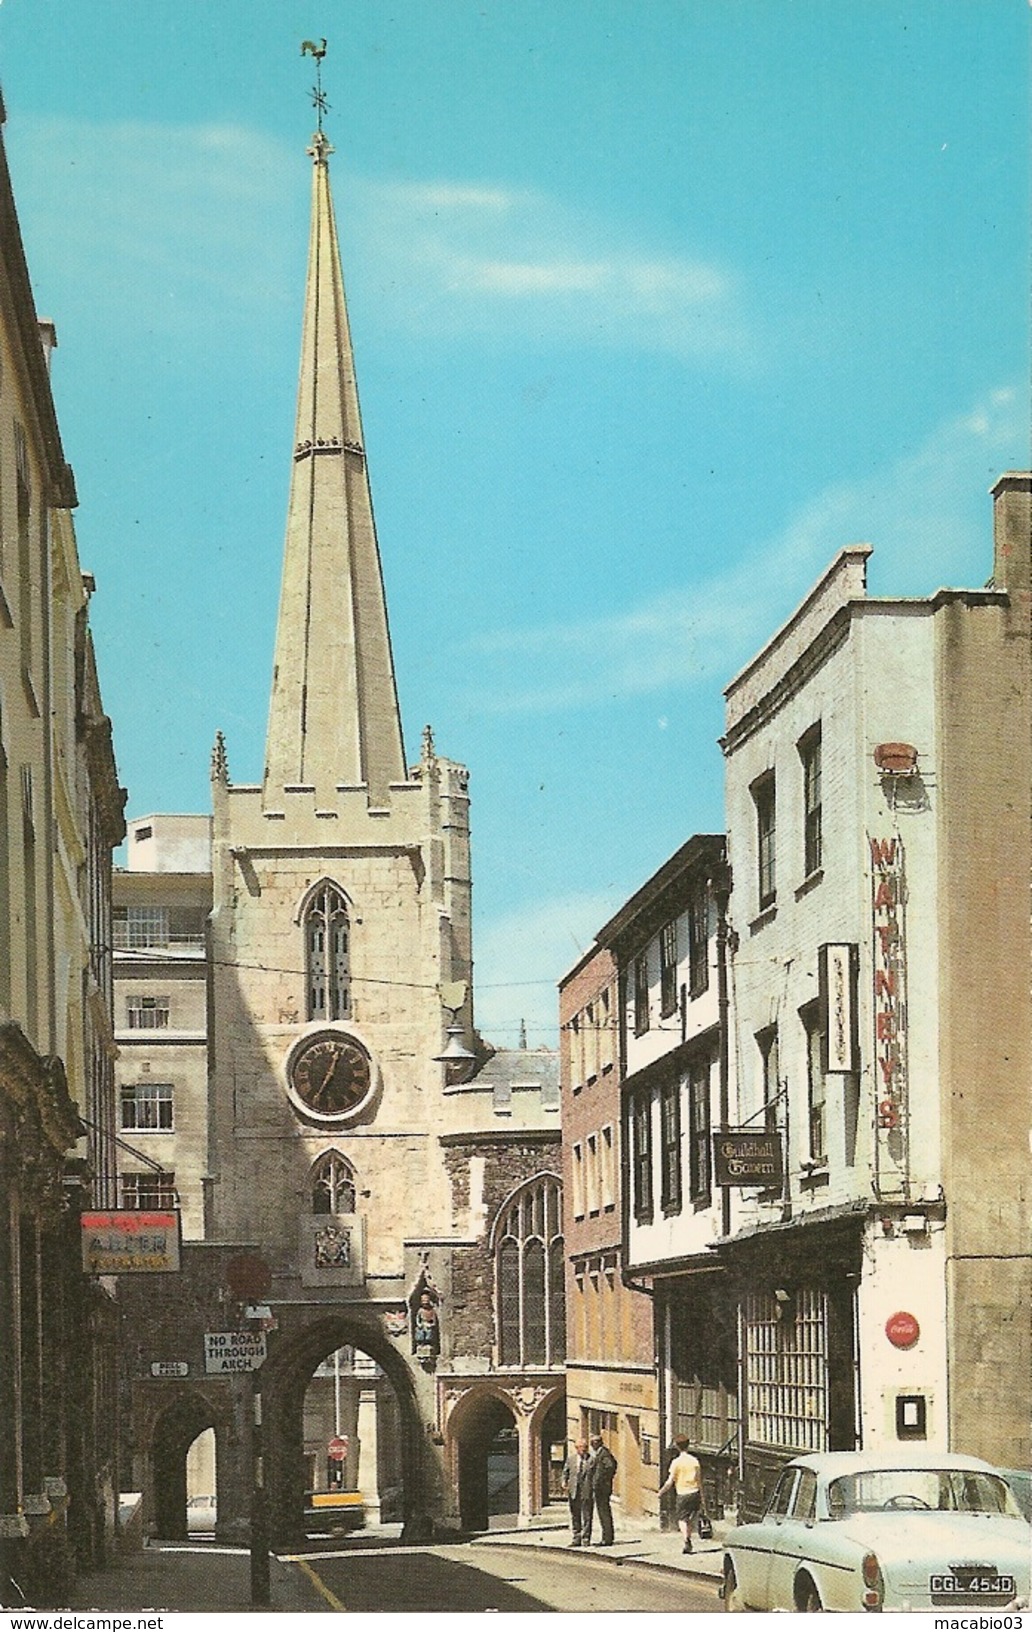 Angleterre  :  Bristol  St John's  Church And The City Gate   Réf 2754 - Bristol